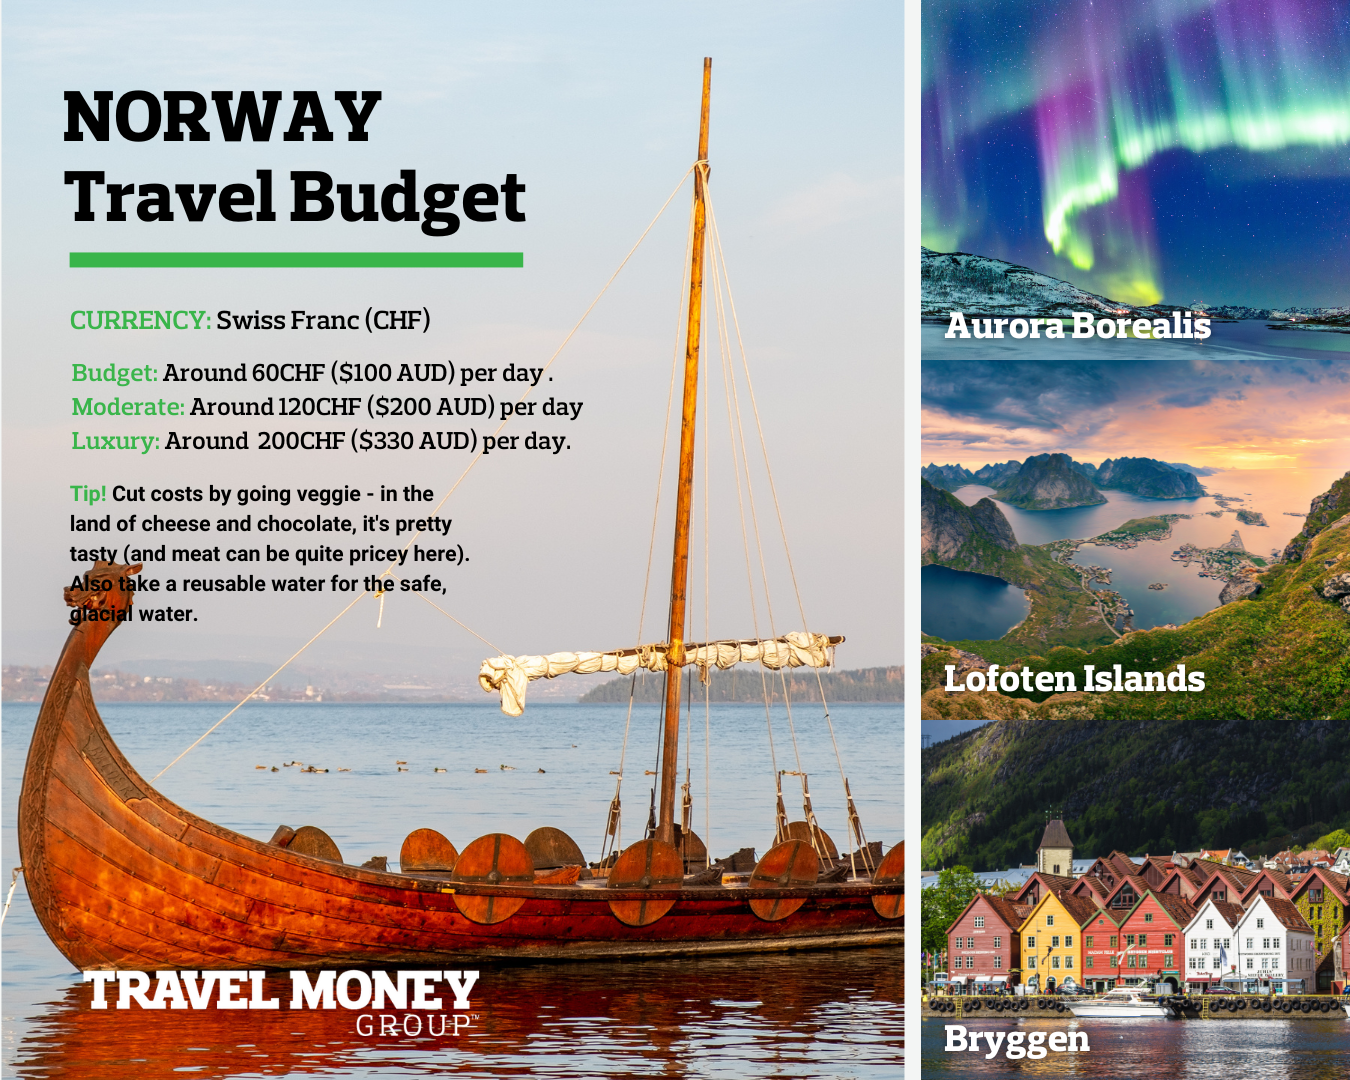 Norway Travel Budget Holiday Planner Infographic Trolltunga Bryggen, Lofoten Islands, Viking Church.